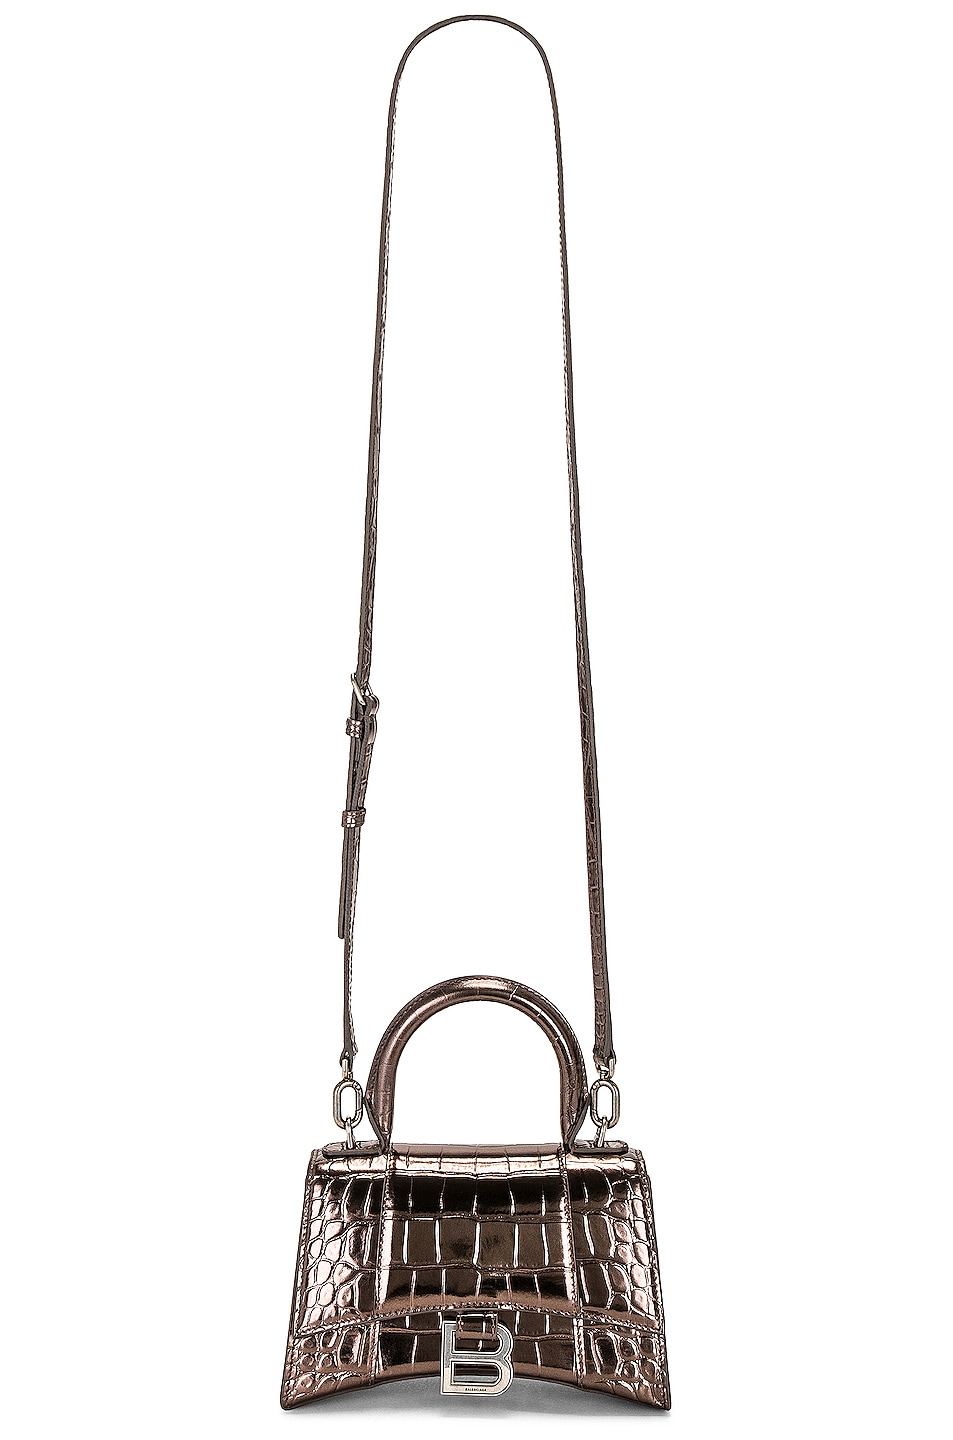 Balenciaga Xs Hourglass Top Handle Bag in Metallic Bronze